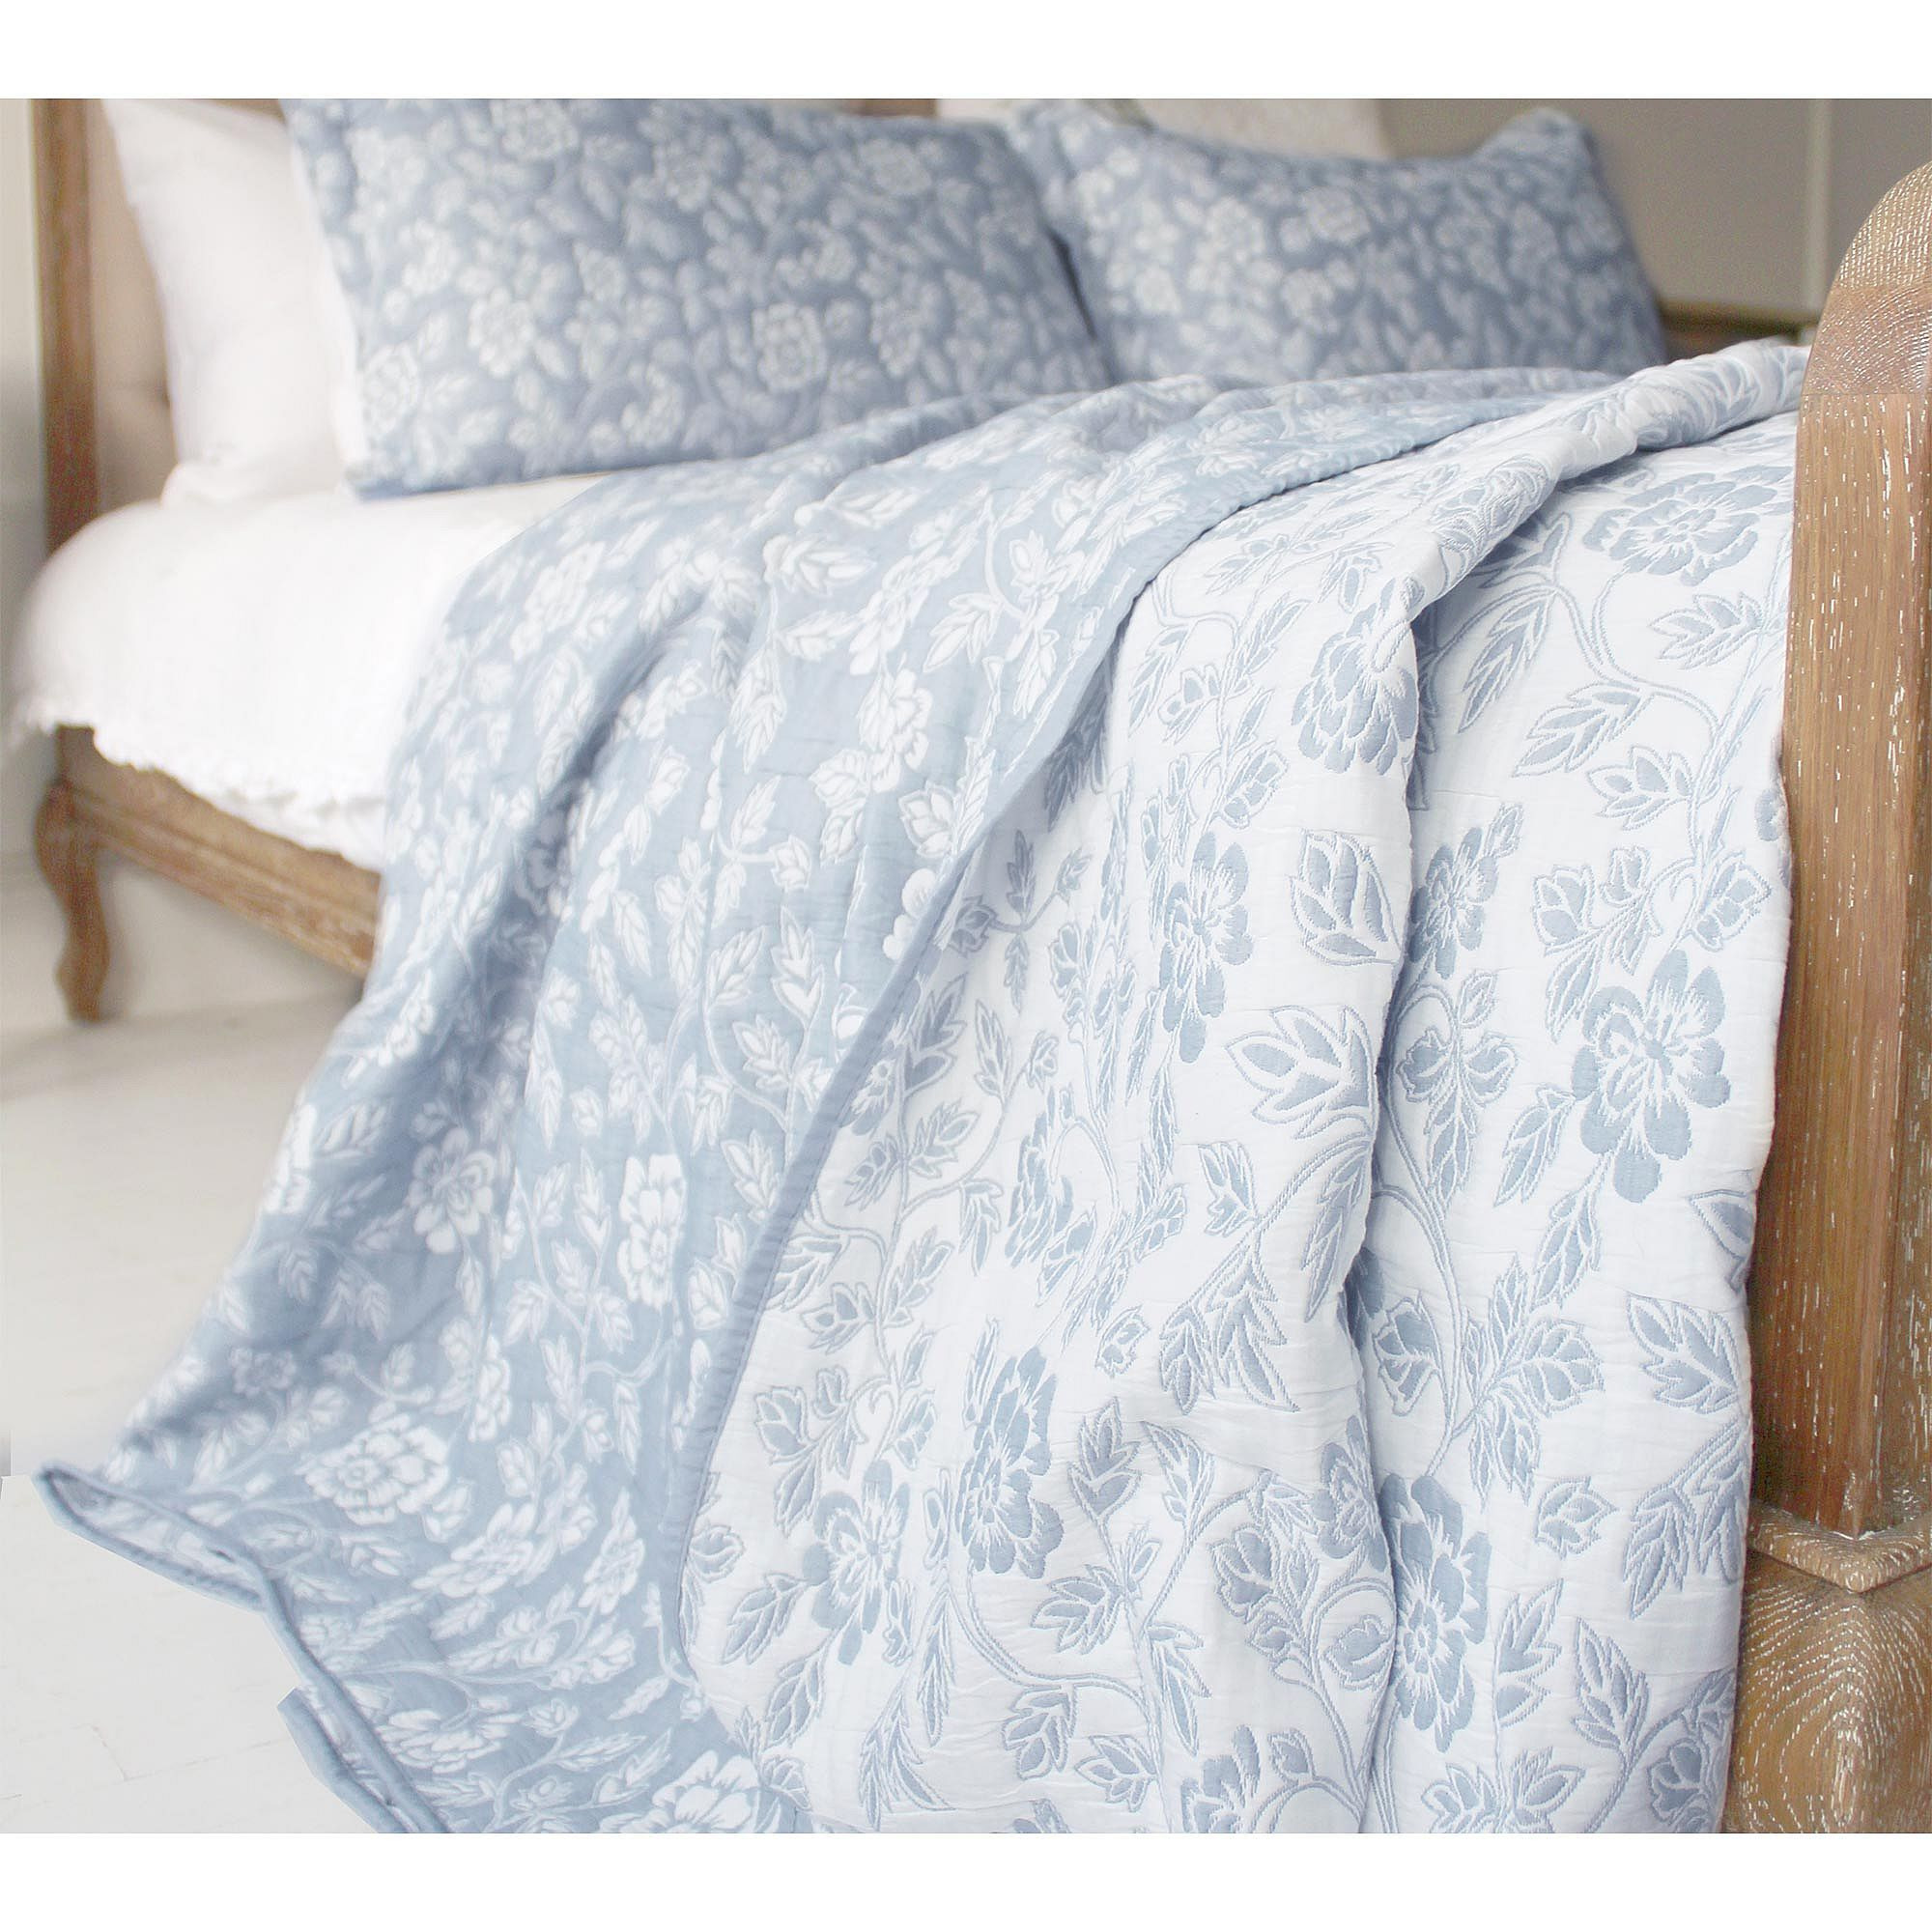 Cotswold Garden Pale Blue Reversible Bedspread and Pillow Sham Set - image 1